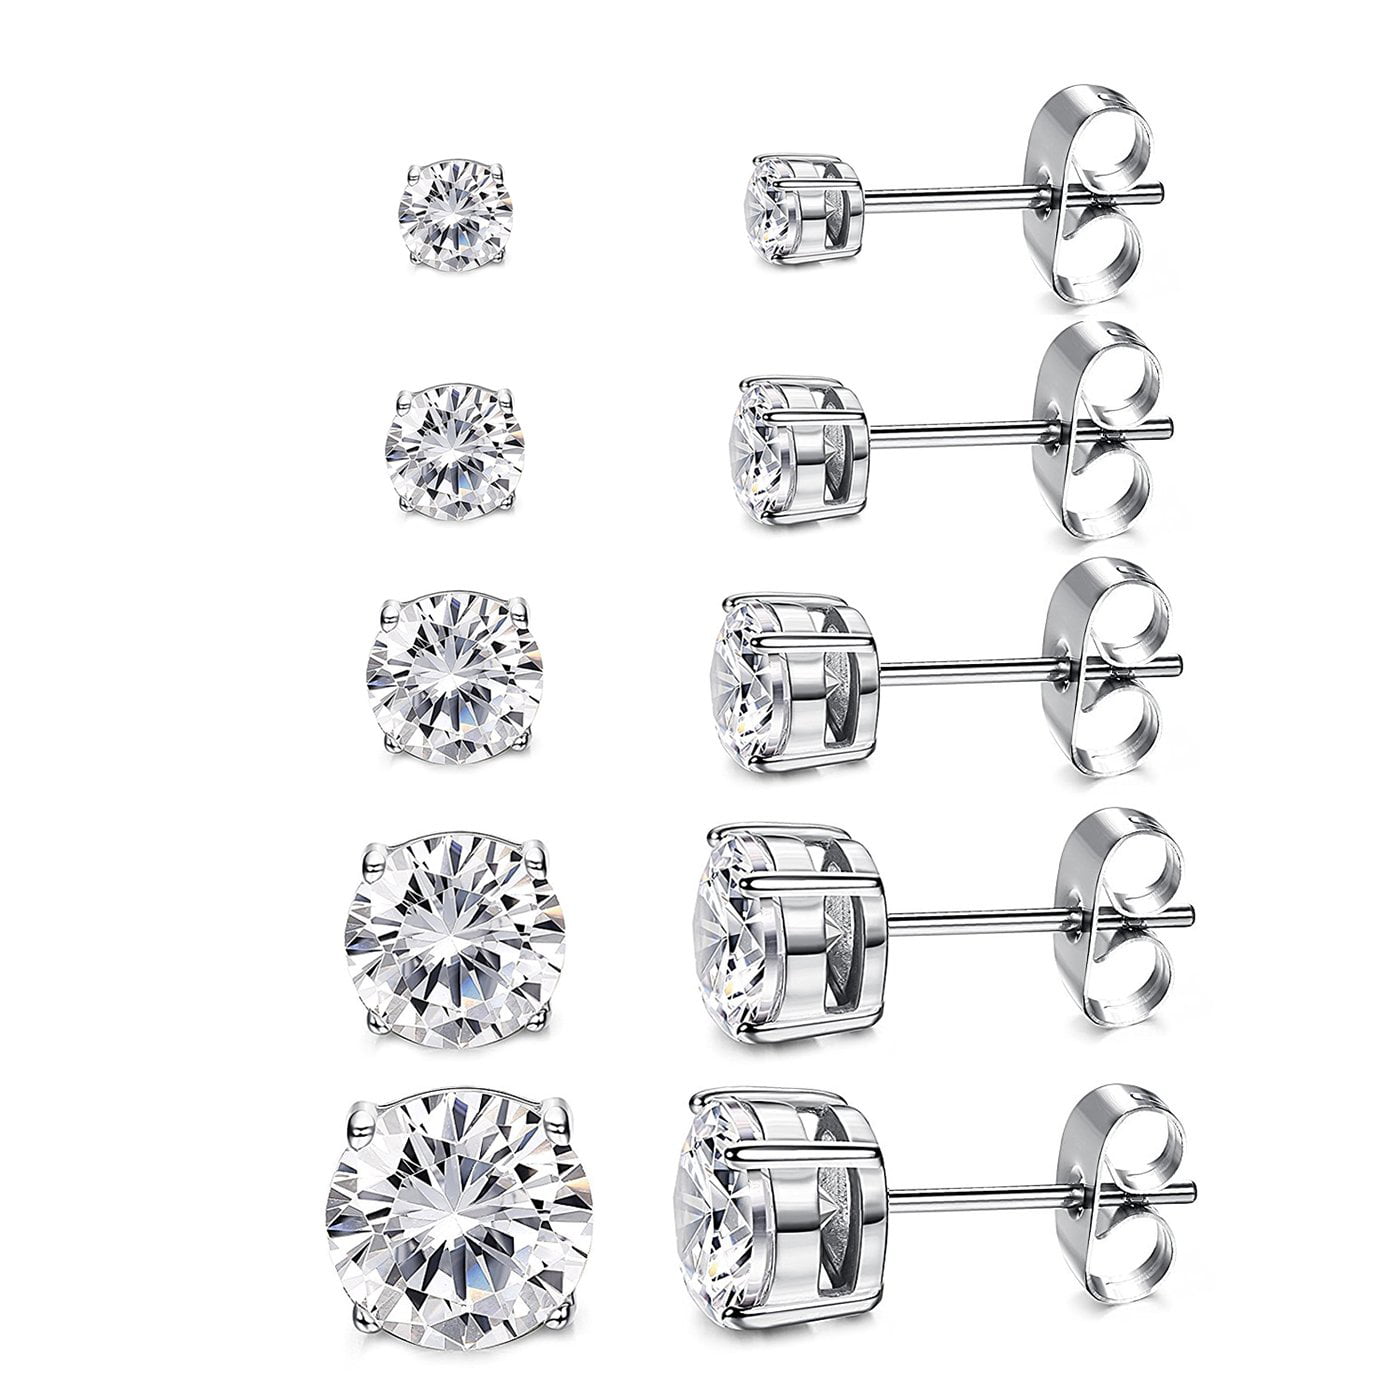 Beauty-OU Brand S925 Pure Sterling Silver Shining Zircon Wedding Engagement CZ Stud Earrings for Women Girl Fine Jewelry Gift